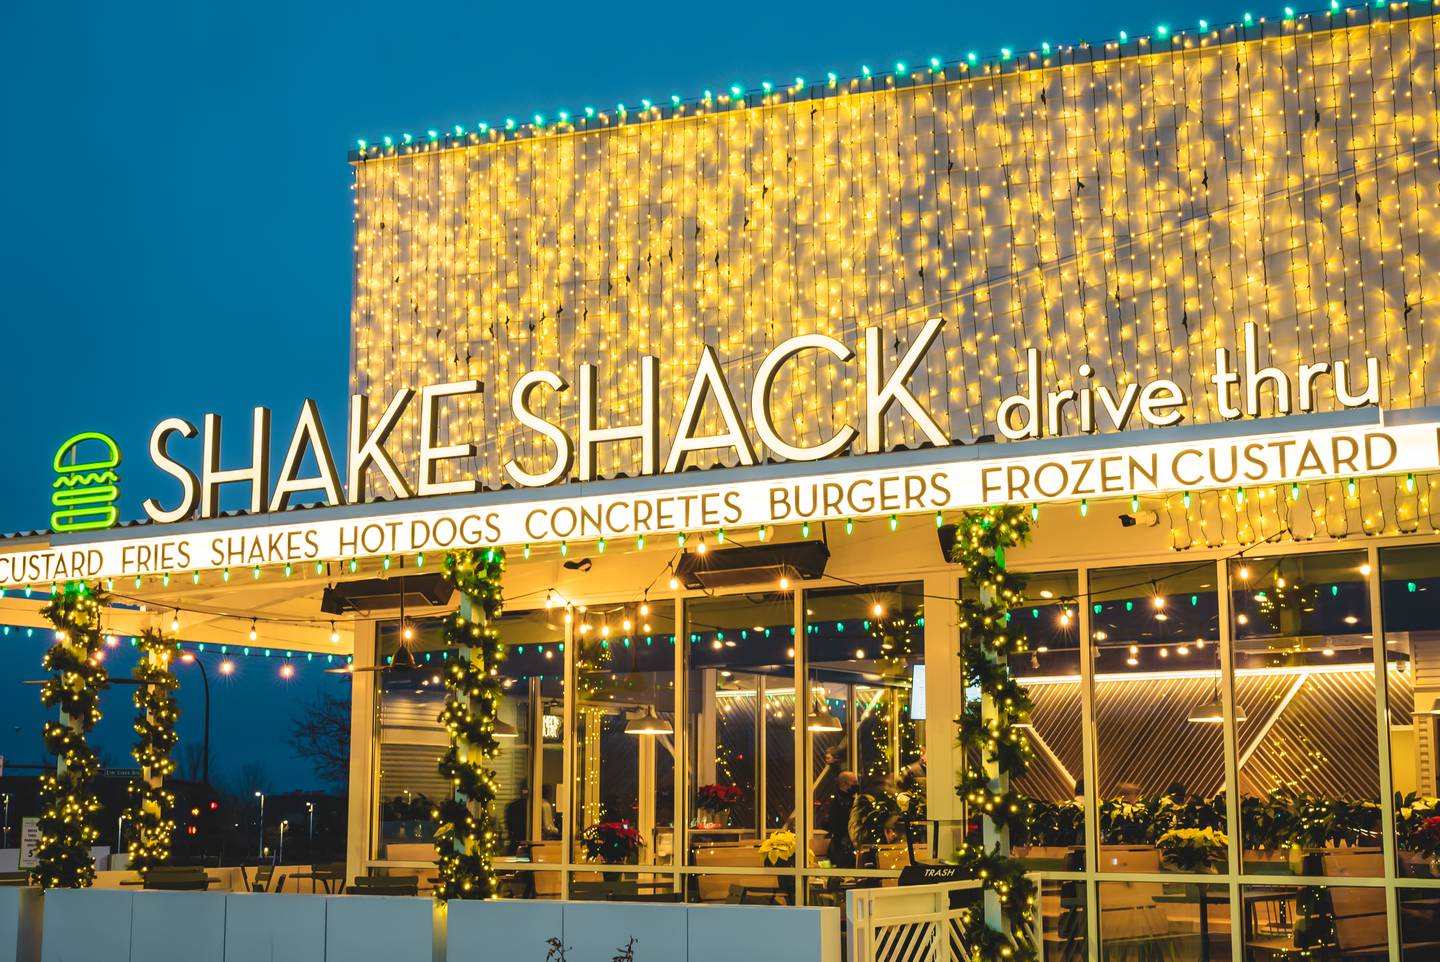 The drive-thru Shake Shack in Canton opens soon.